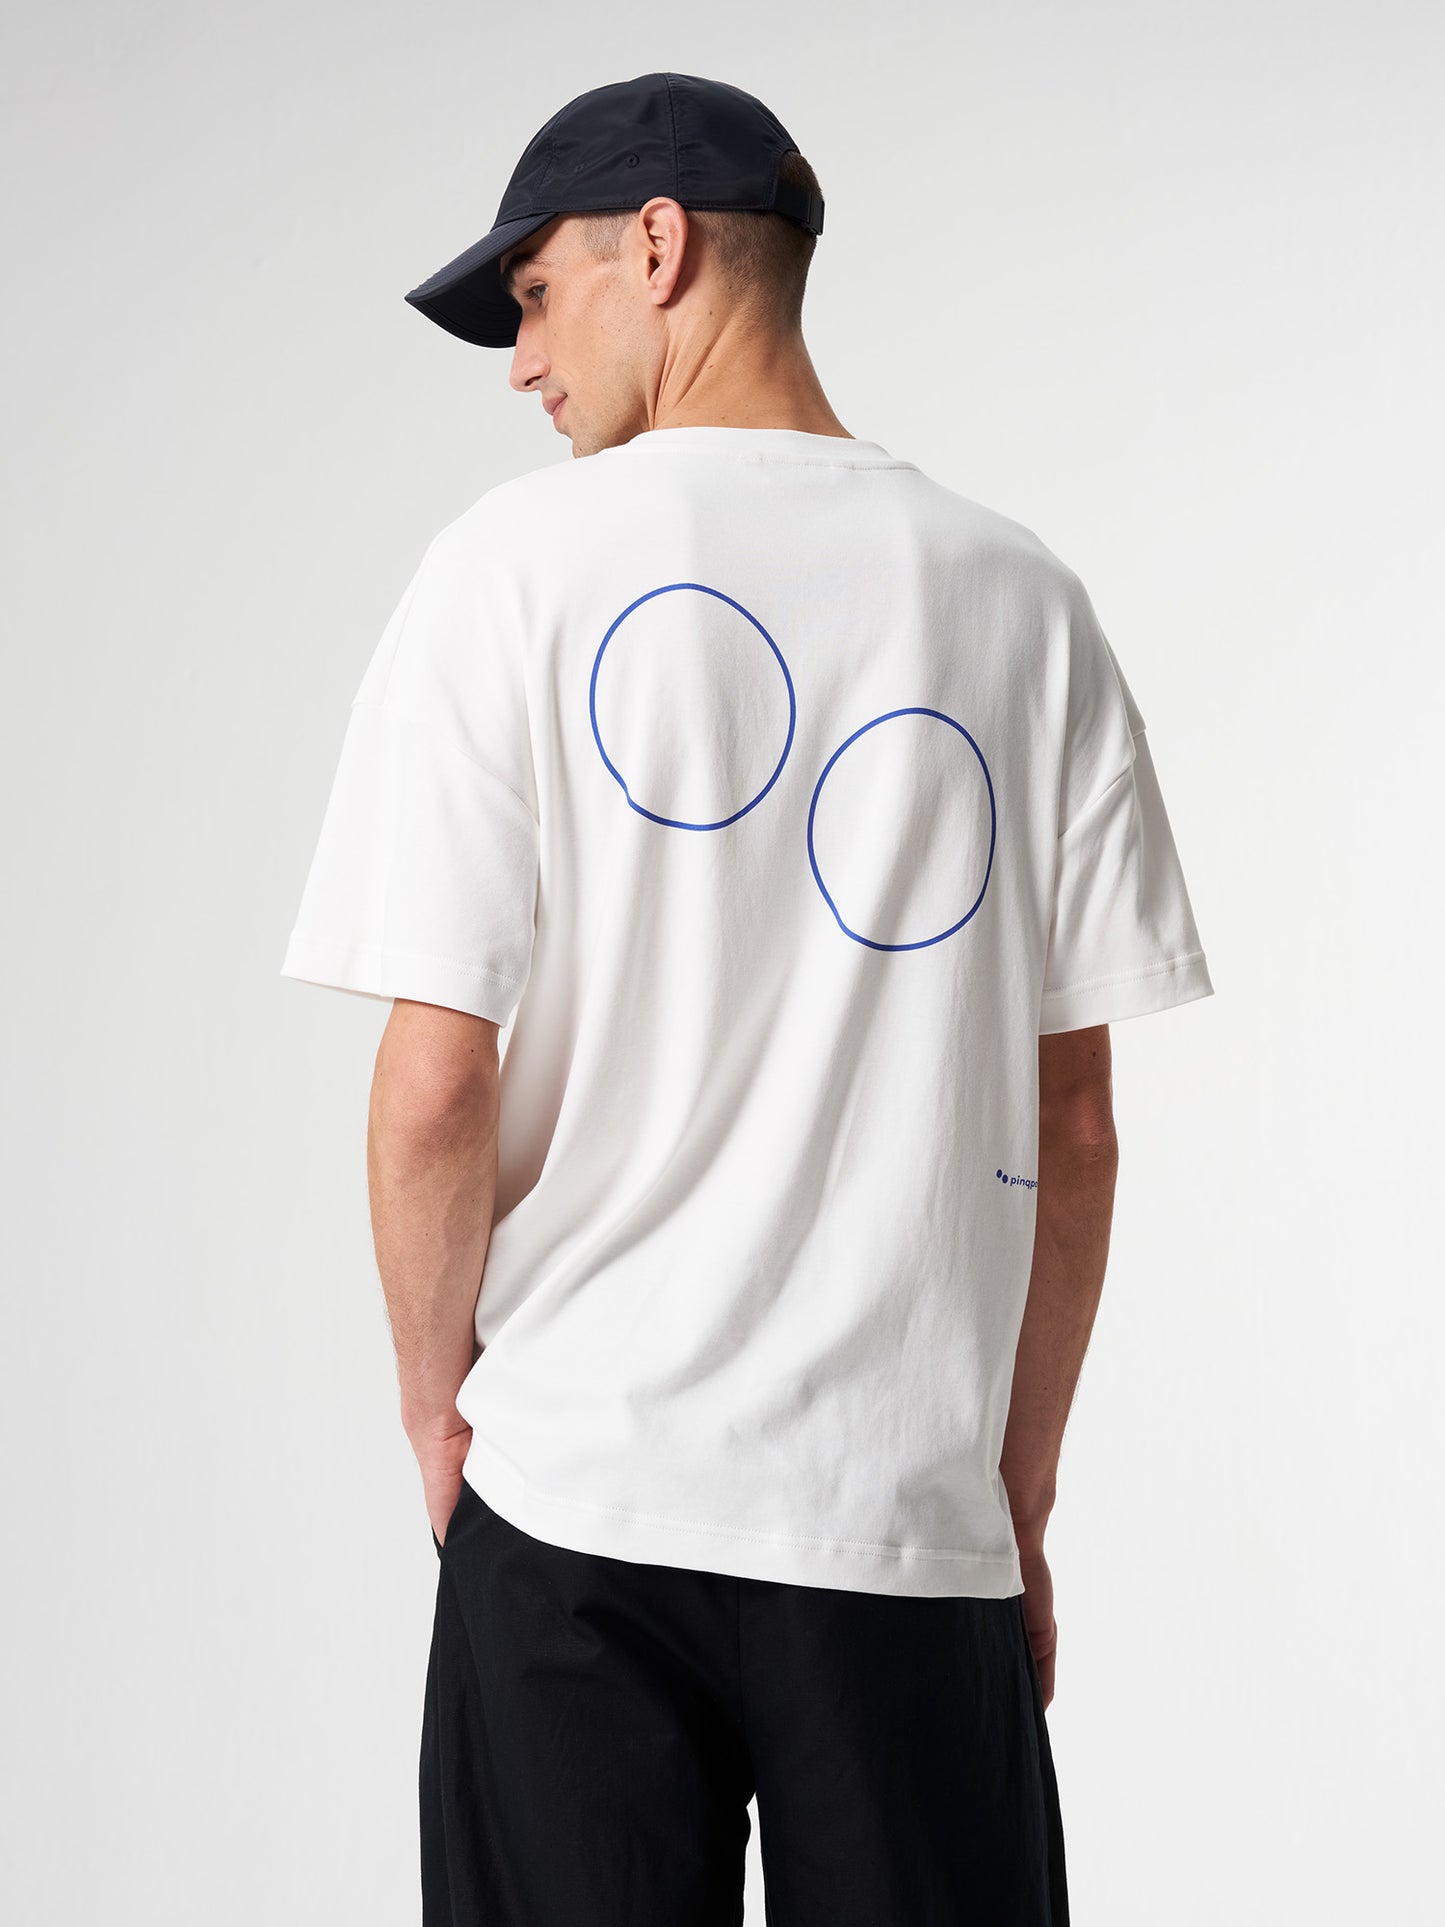 pinqponq-Tshirt-Unisex-Circles-Dandelion-White-model-back